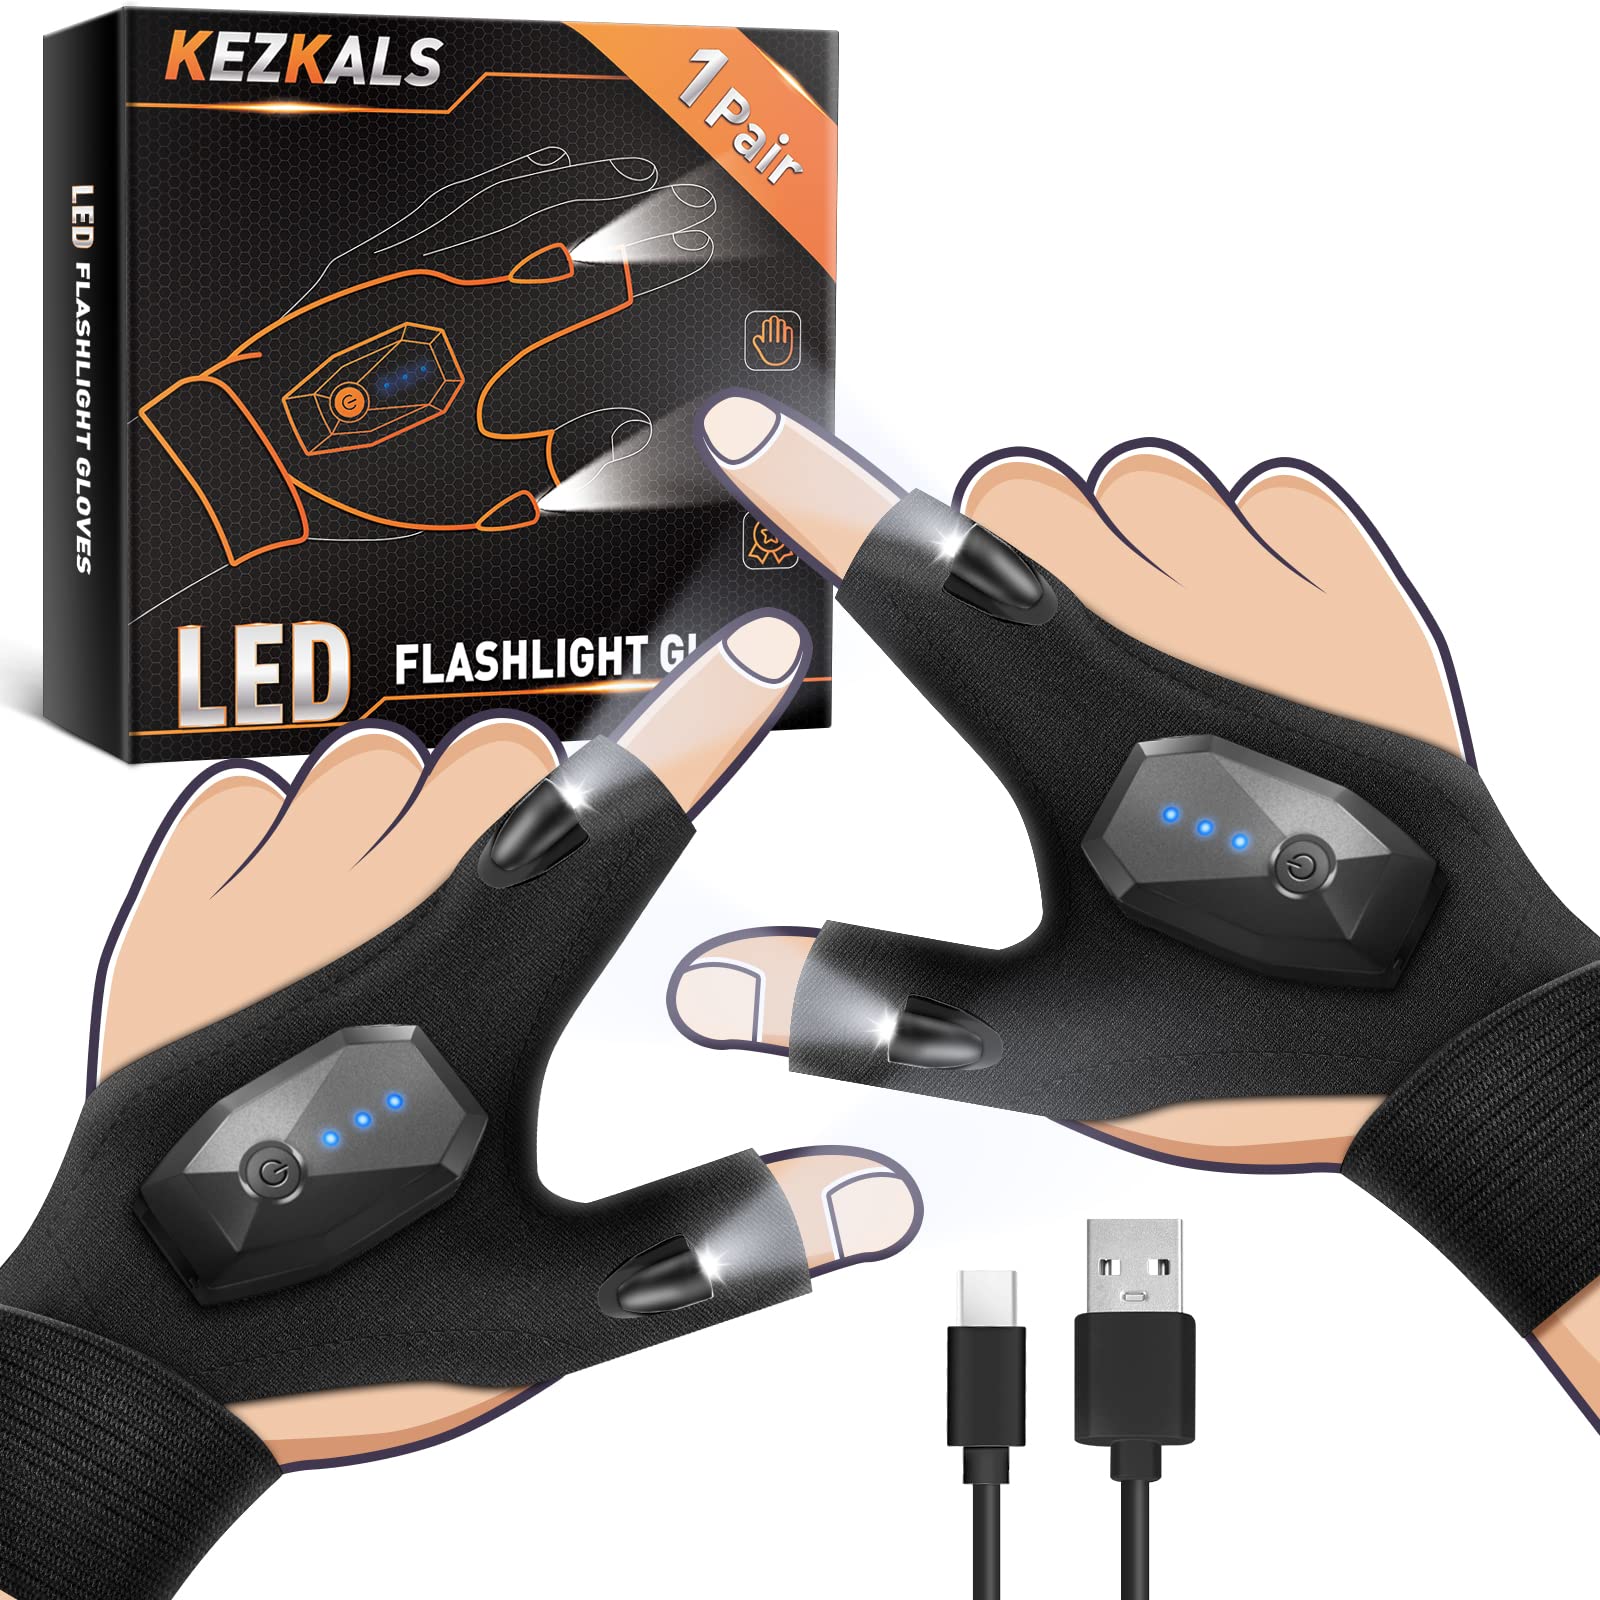 KEZKALS Gifts for Men, LED Rechargeable Flashlight Gloves, Cool Gadgets for  Men, Gifts for Him, Boyfriend